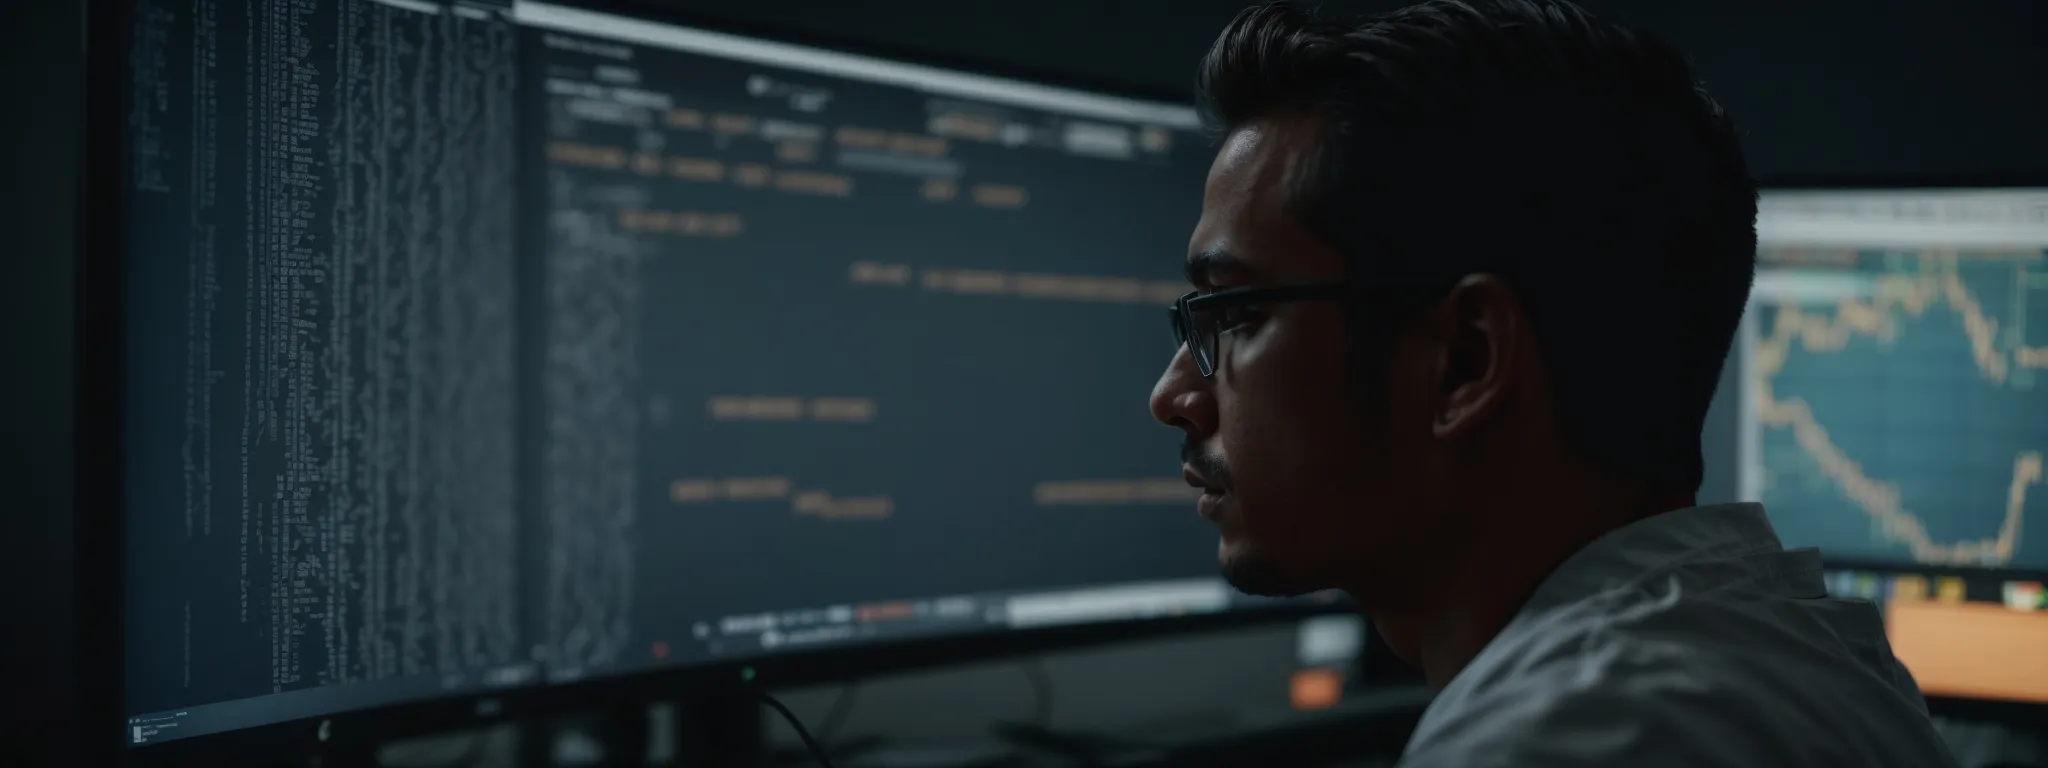 a web developer intently scrutinizes code on a computer screen, optimizing a website's seo settings.